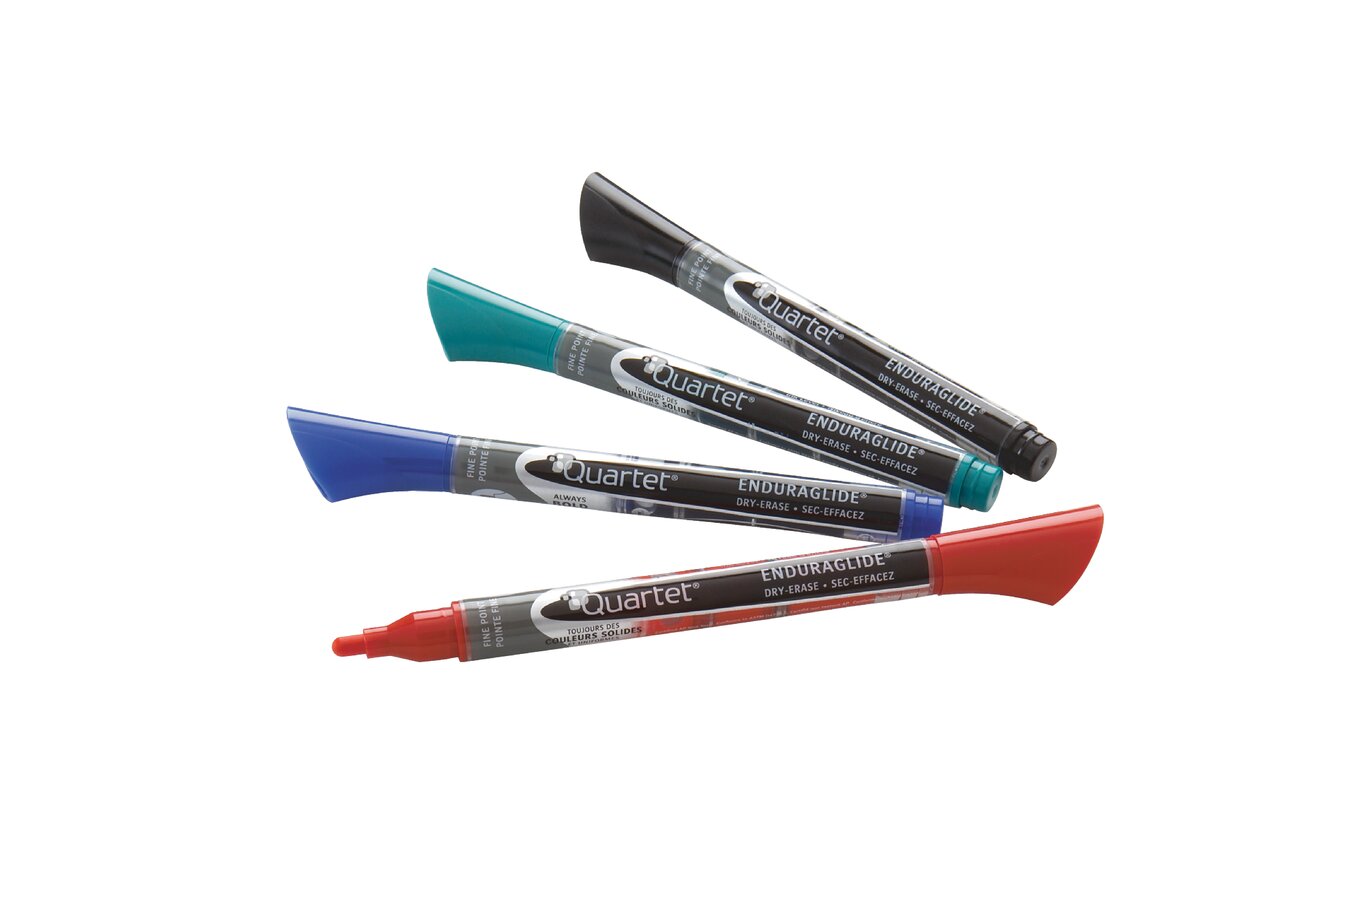 White Liquid Chalk Dry Erase Marker Pens - 4 Pack - Brilliant White Color -  Eraser and Magnet Included